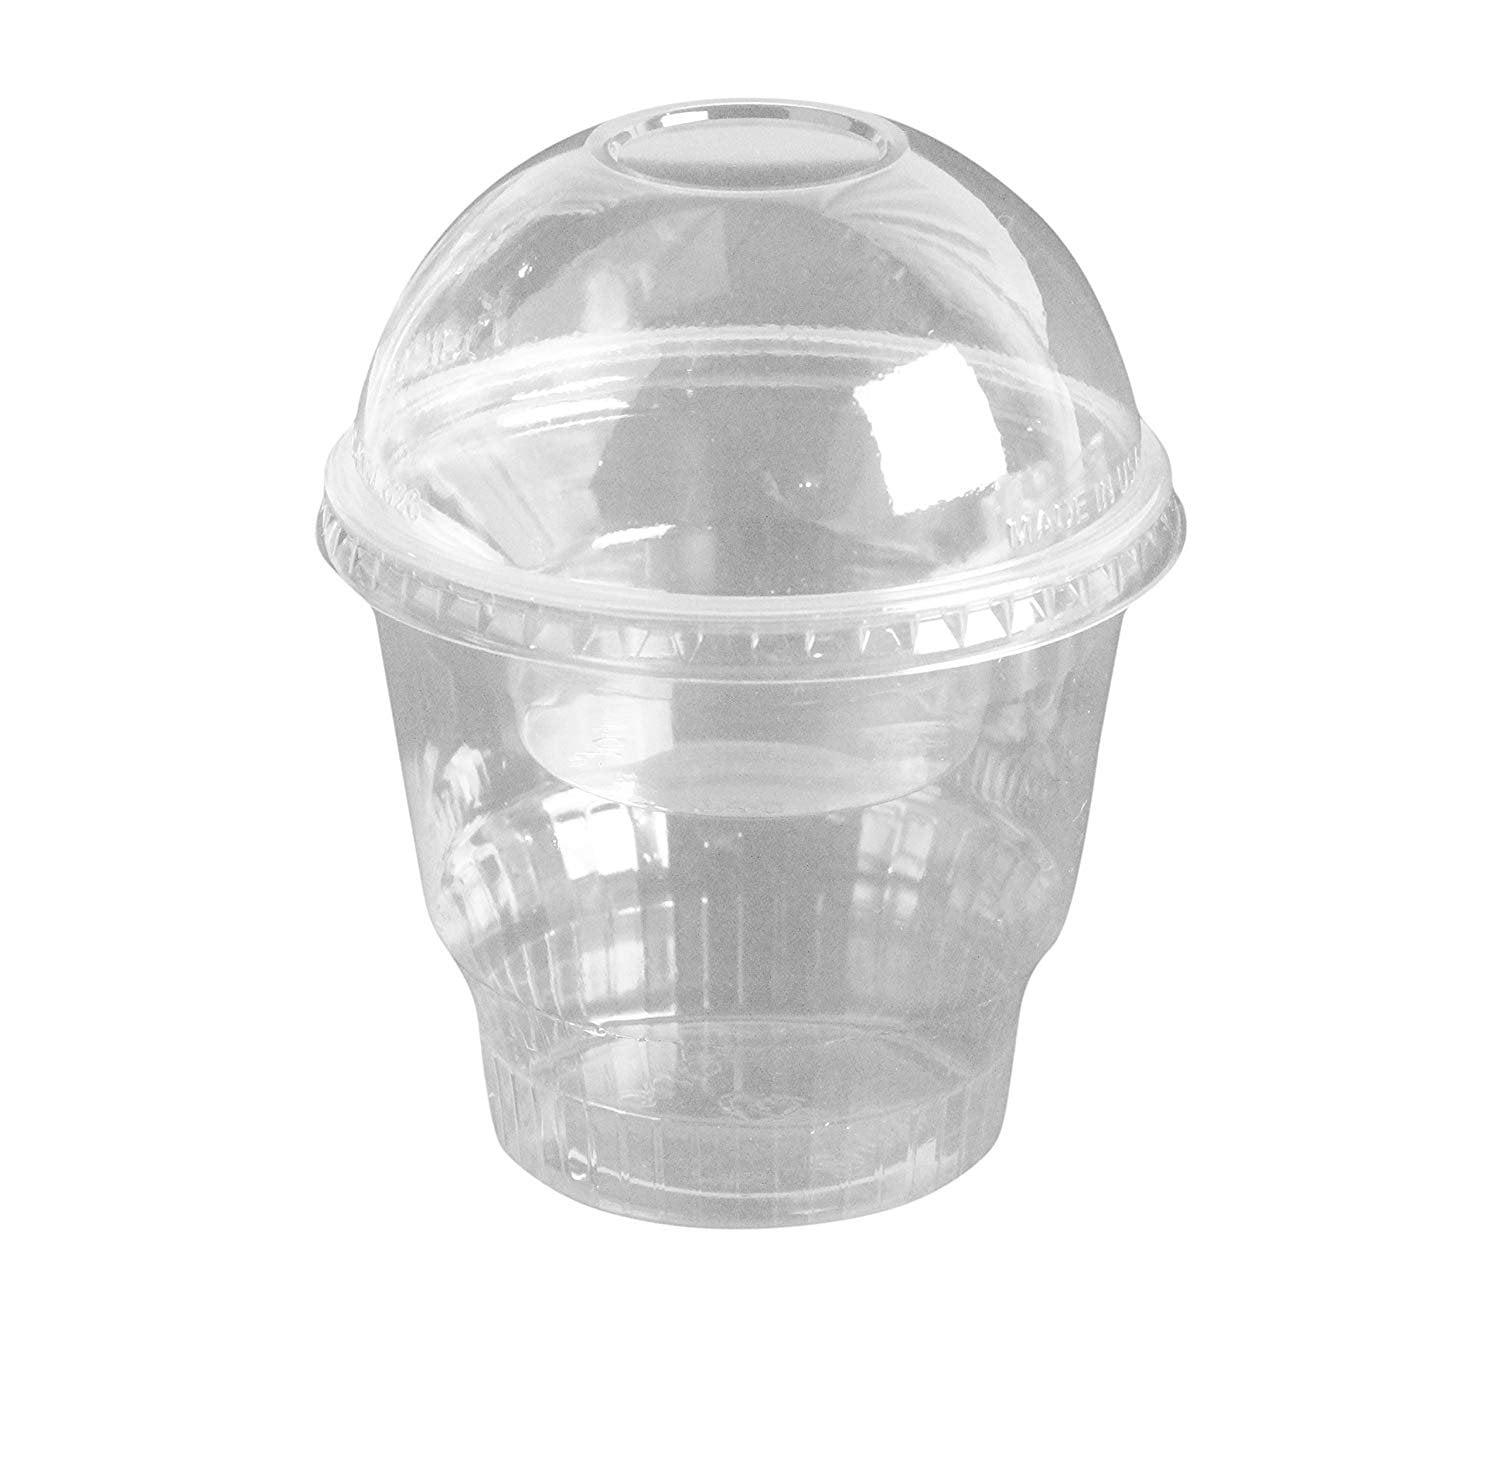 Dome Lid Flat Lid Pack of 25 Clear 4-Piece Plastic 9 oz Parfait Cup w/ Insert 